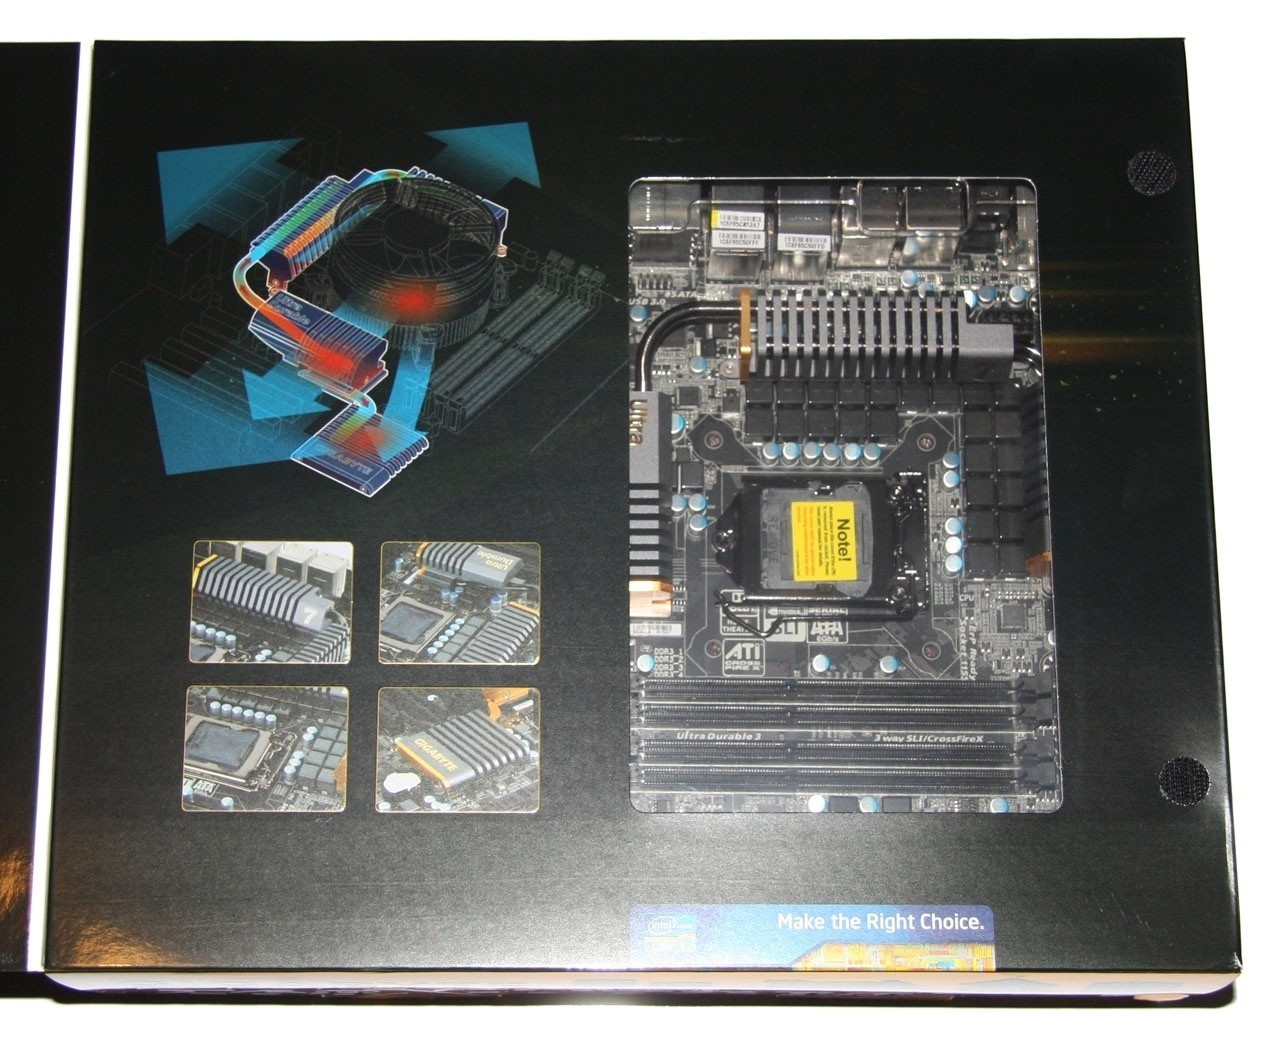 GIGABYTE Z68X-UD7-B3 (Intel Z68) Motherboard Review